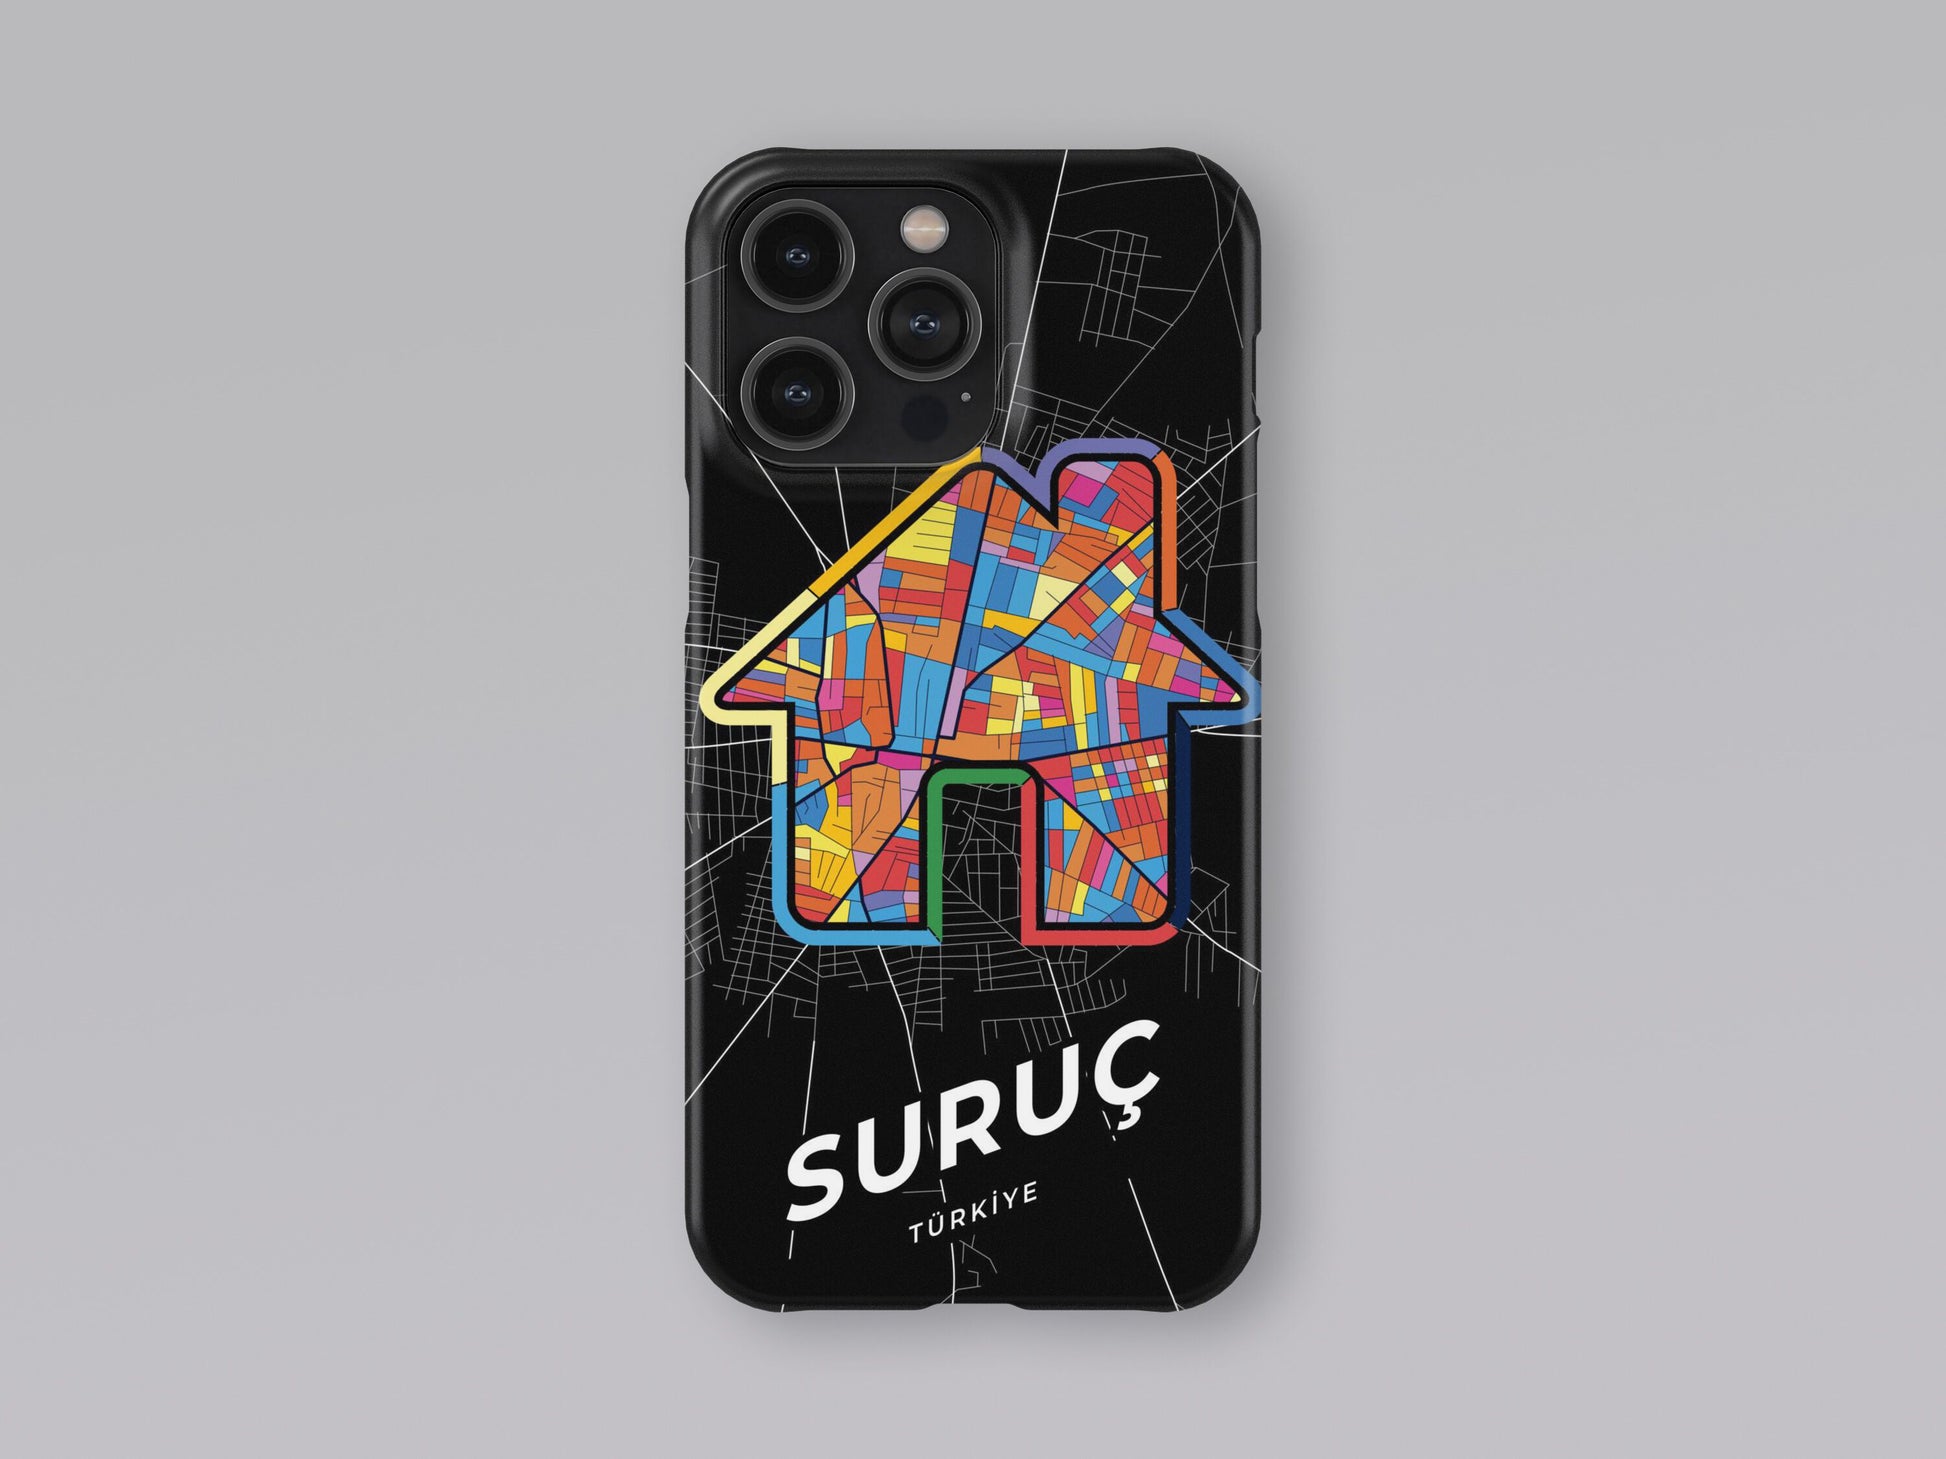 Suruç Turkey slim phone case with colorful icon 3